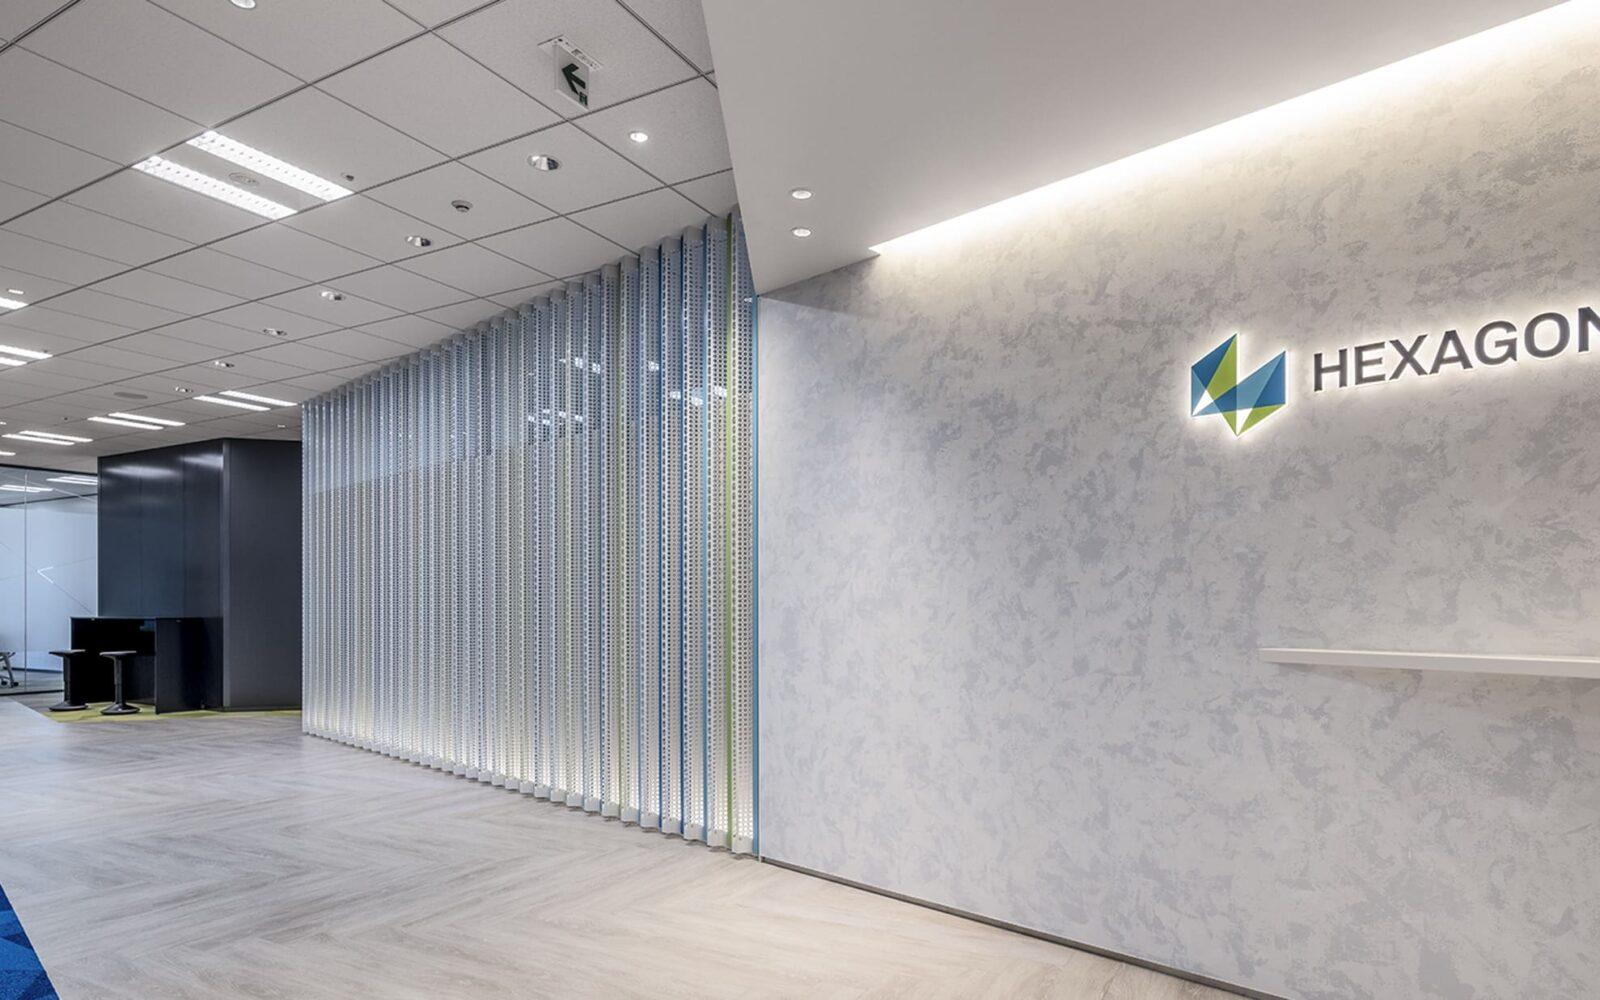 GARDE为 “Hexagon Manufacturing Intelligence” 设计东京办公室 设计一个可以体验企业品牌的舒适工作场所